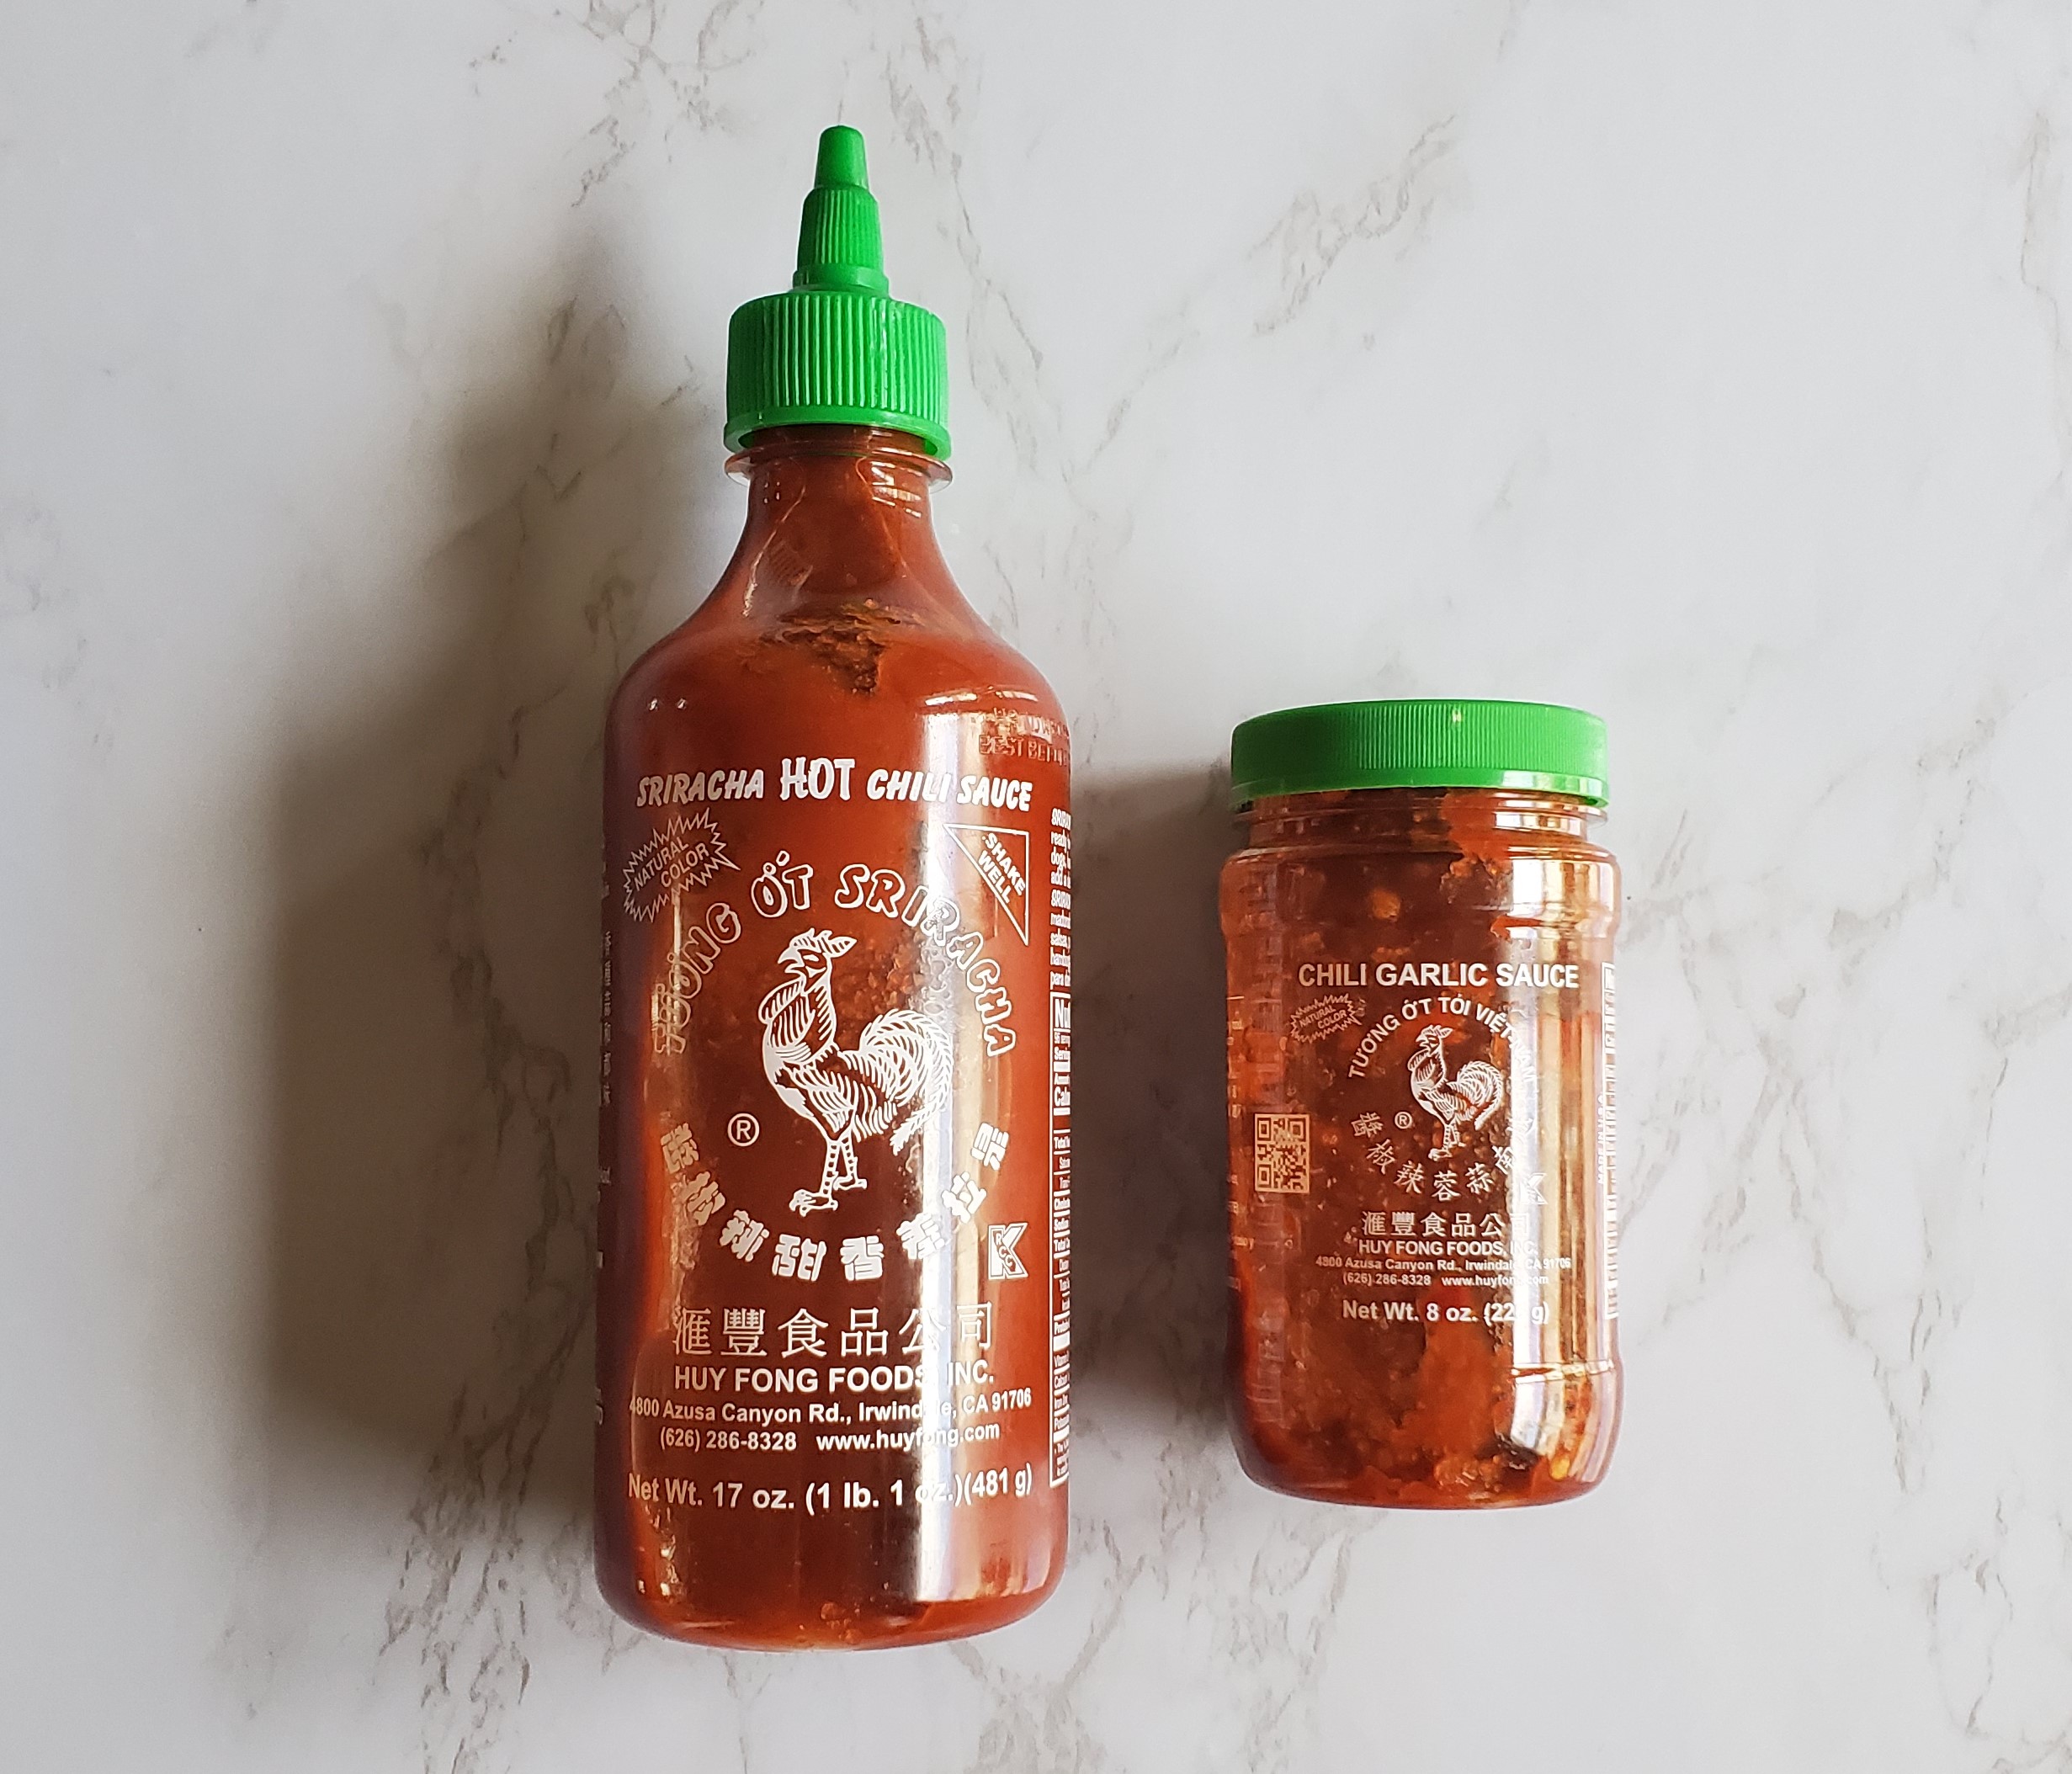 Sriracha and Chili Garlic Sauce on a white marble background.